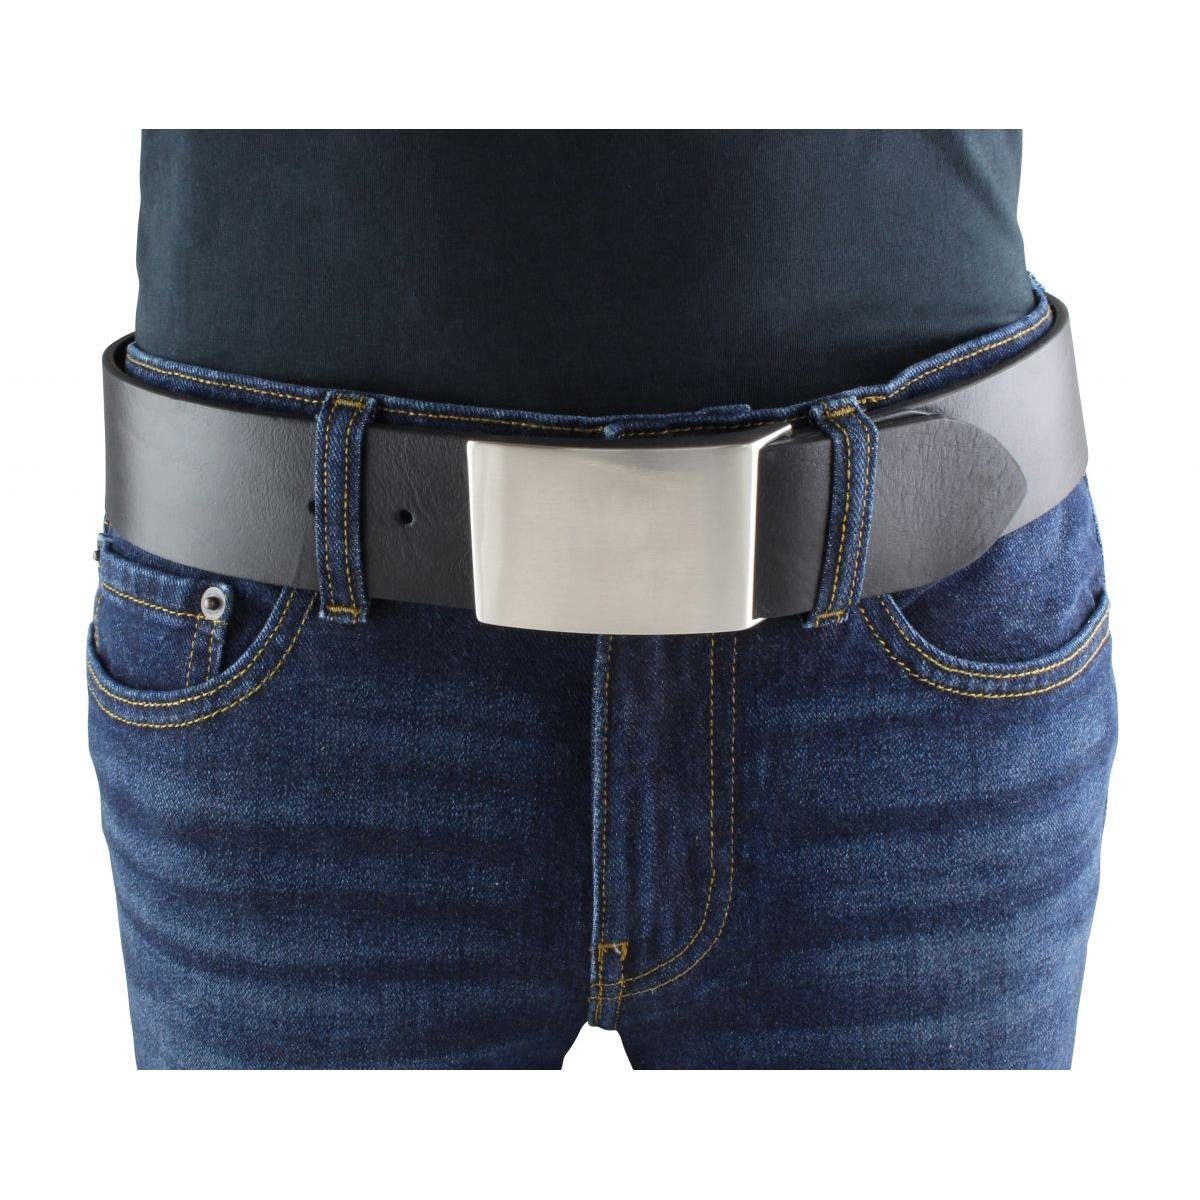 BELTINGER - aus Vollrindleder Jeans cm 5,0 Silber - 50mm Jeans-Gürtel Herren für Tabac, Gürtel Ledergürtel